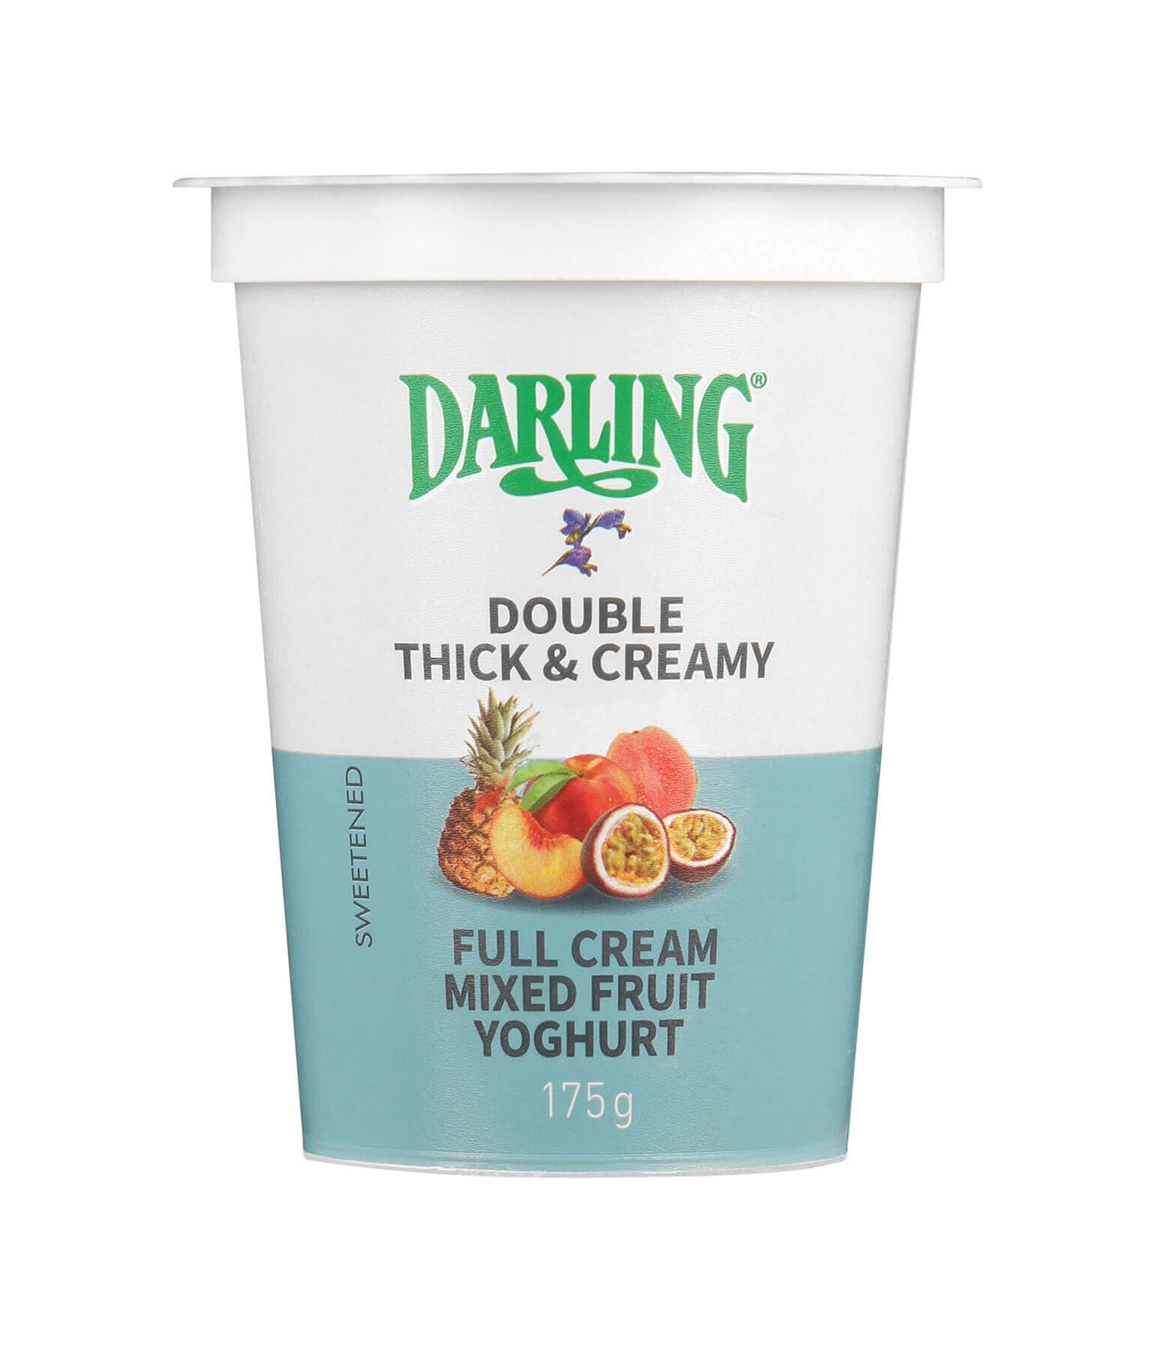 CFS Home. Darling Mixed Fruit Fruit Full Cream Yoghurt 175g